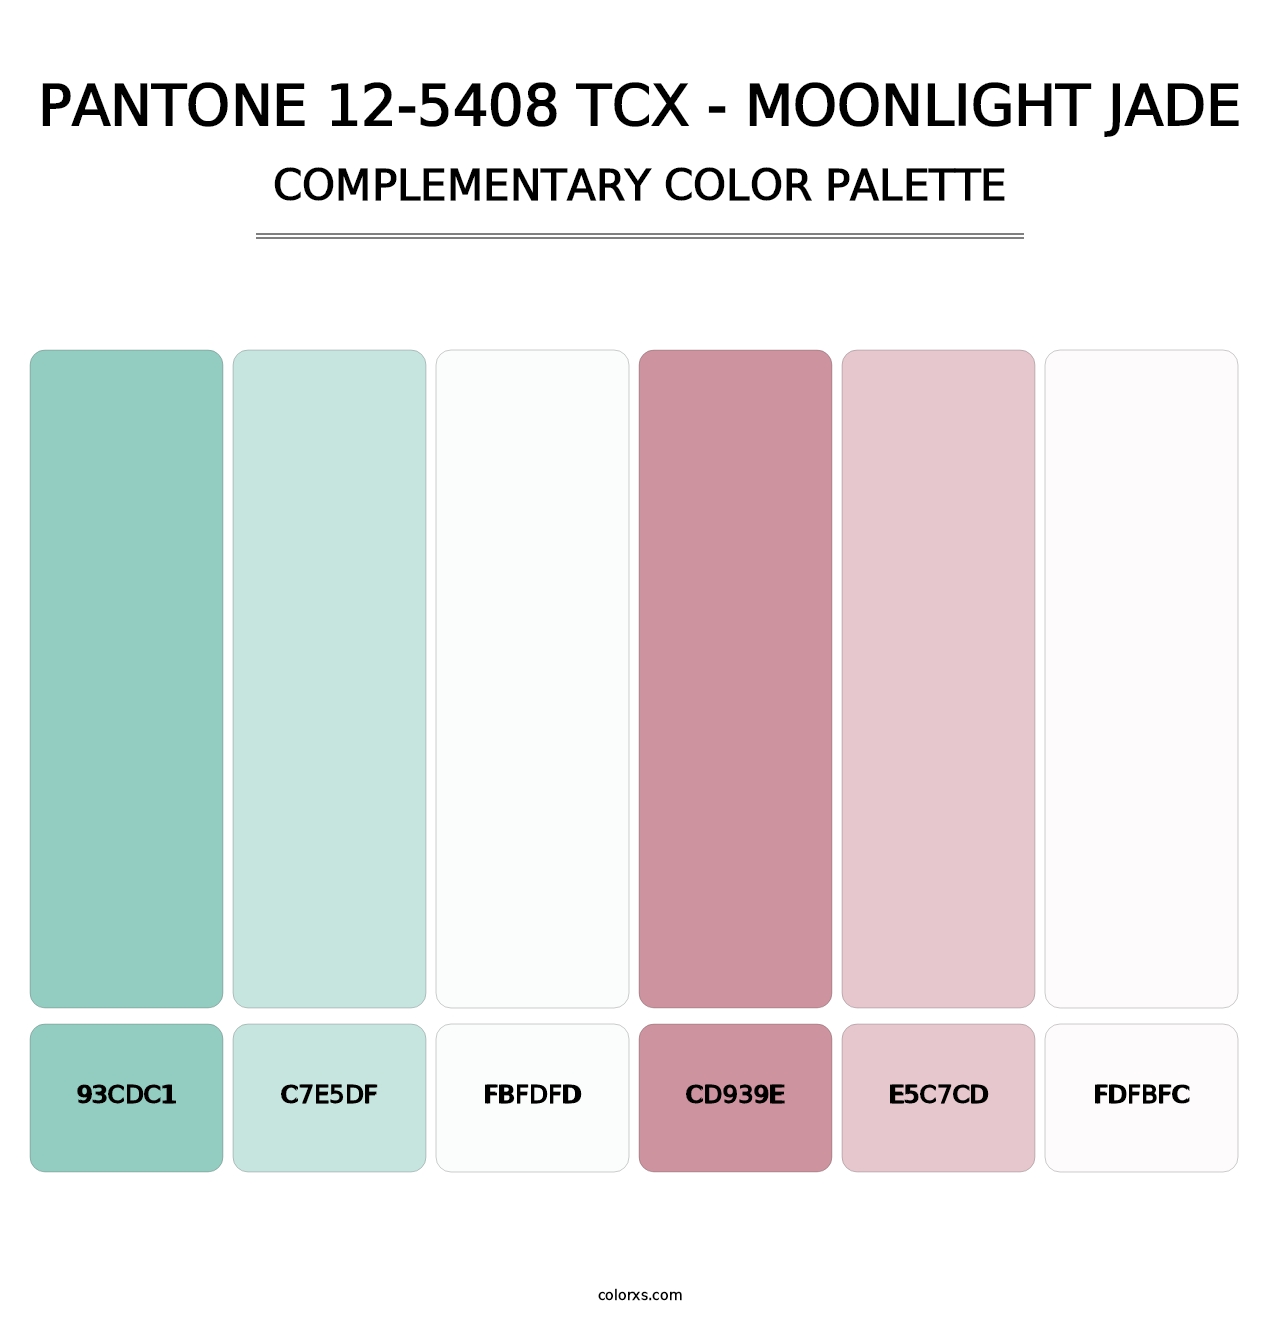 PANTONE 12-5408 TCX - Moonlight Jade - Complementary Color Palette